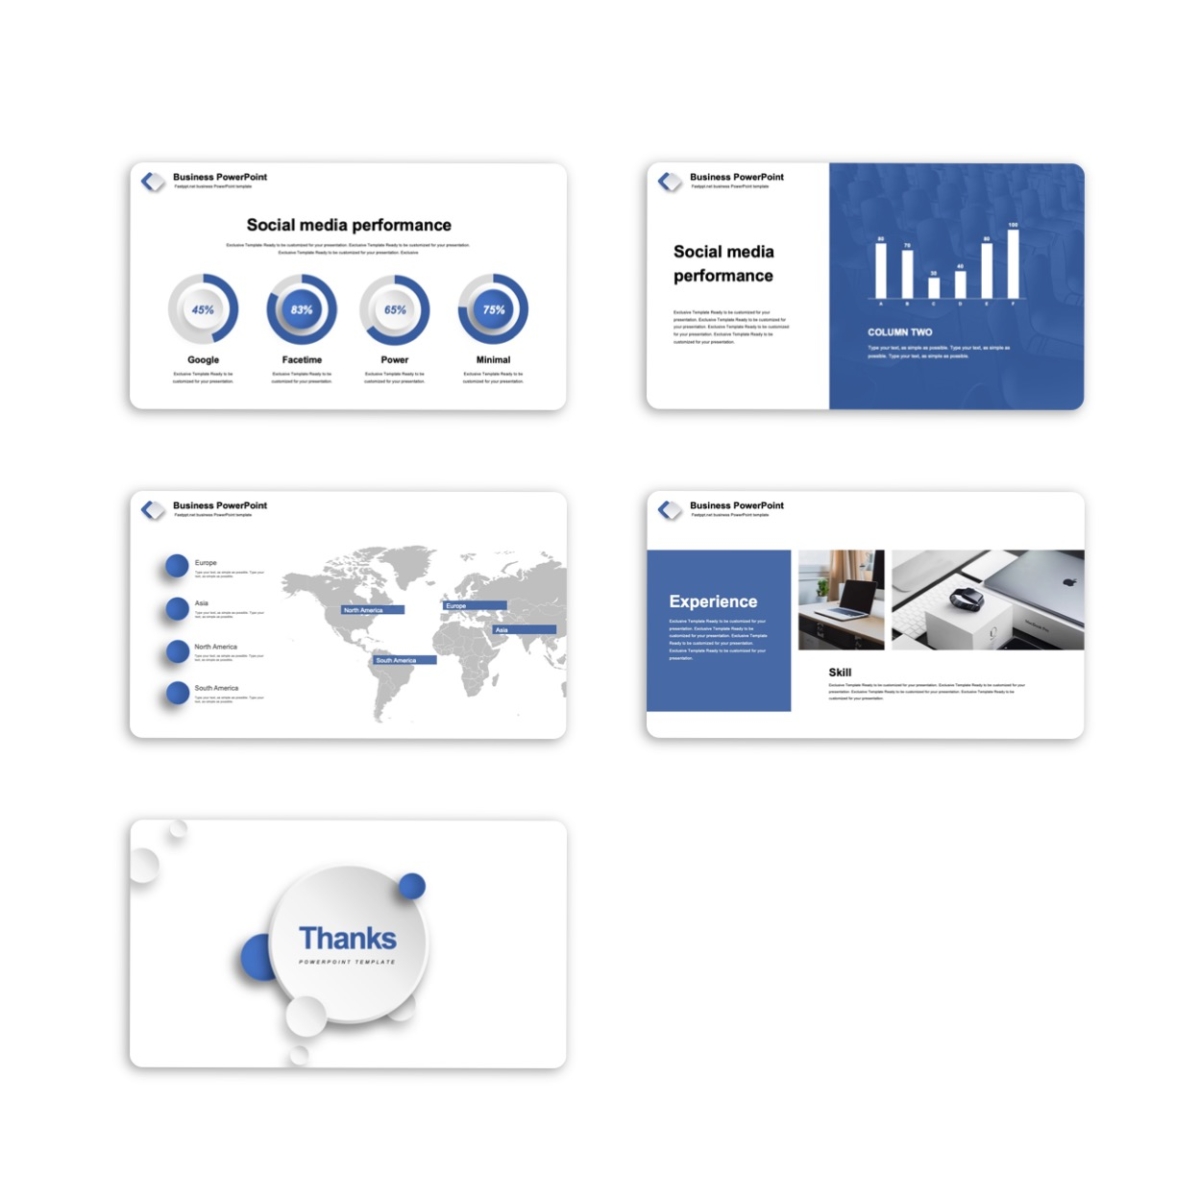 Google Slides-A Company Introduction Business Plan Presentation Template